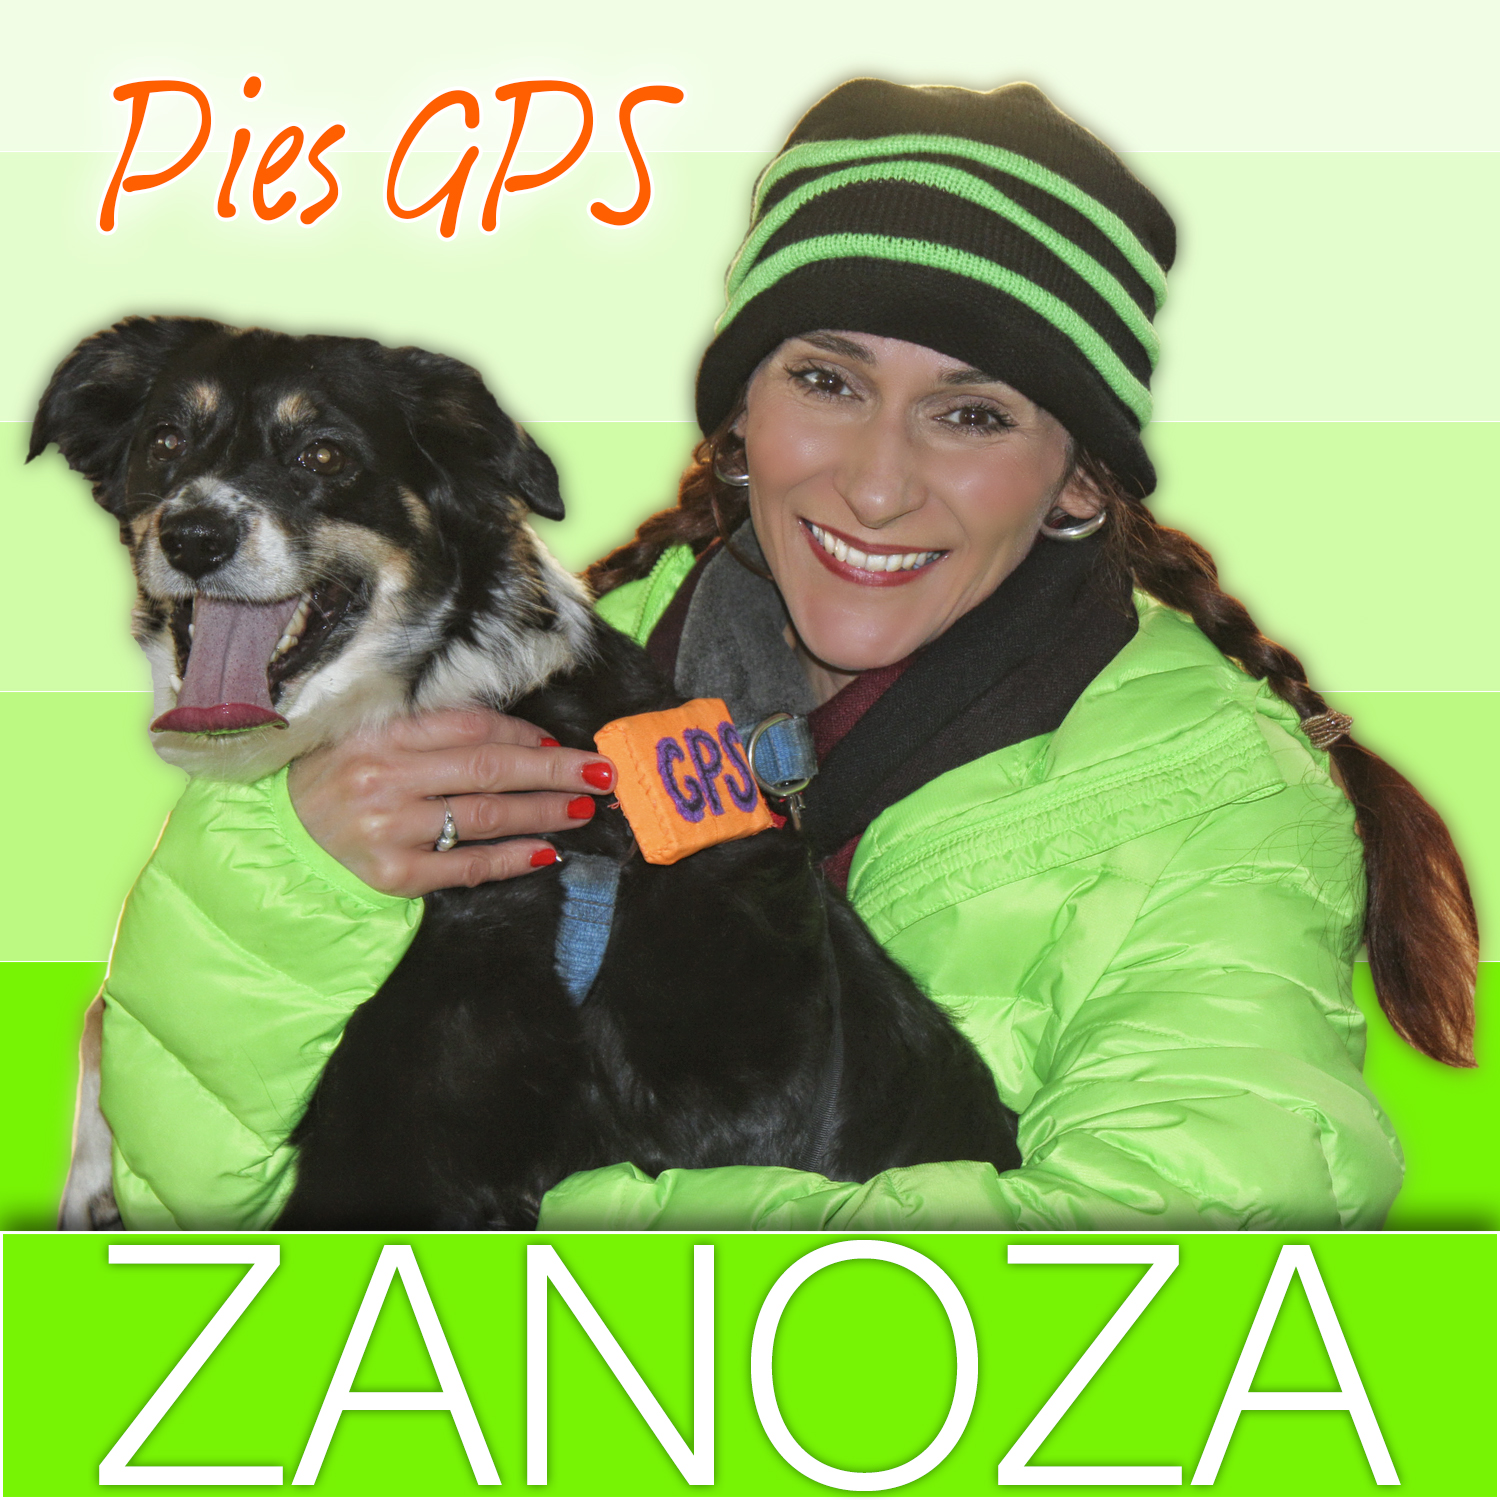 Zanoza - Pies GPS